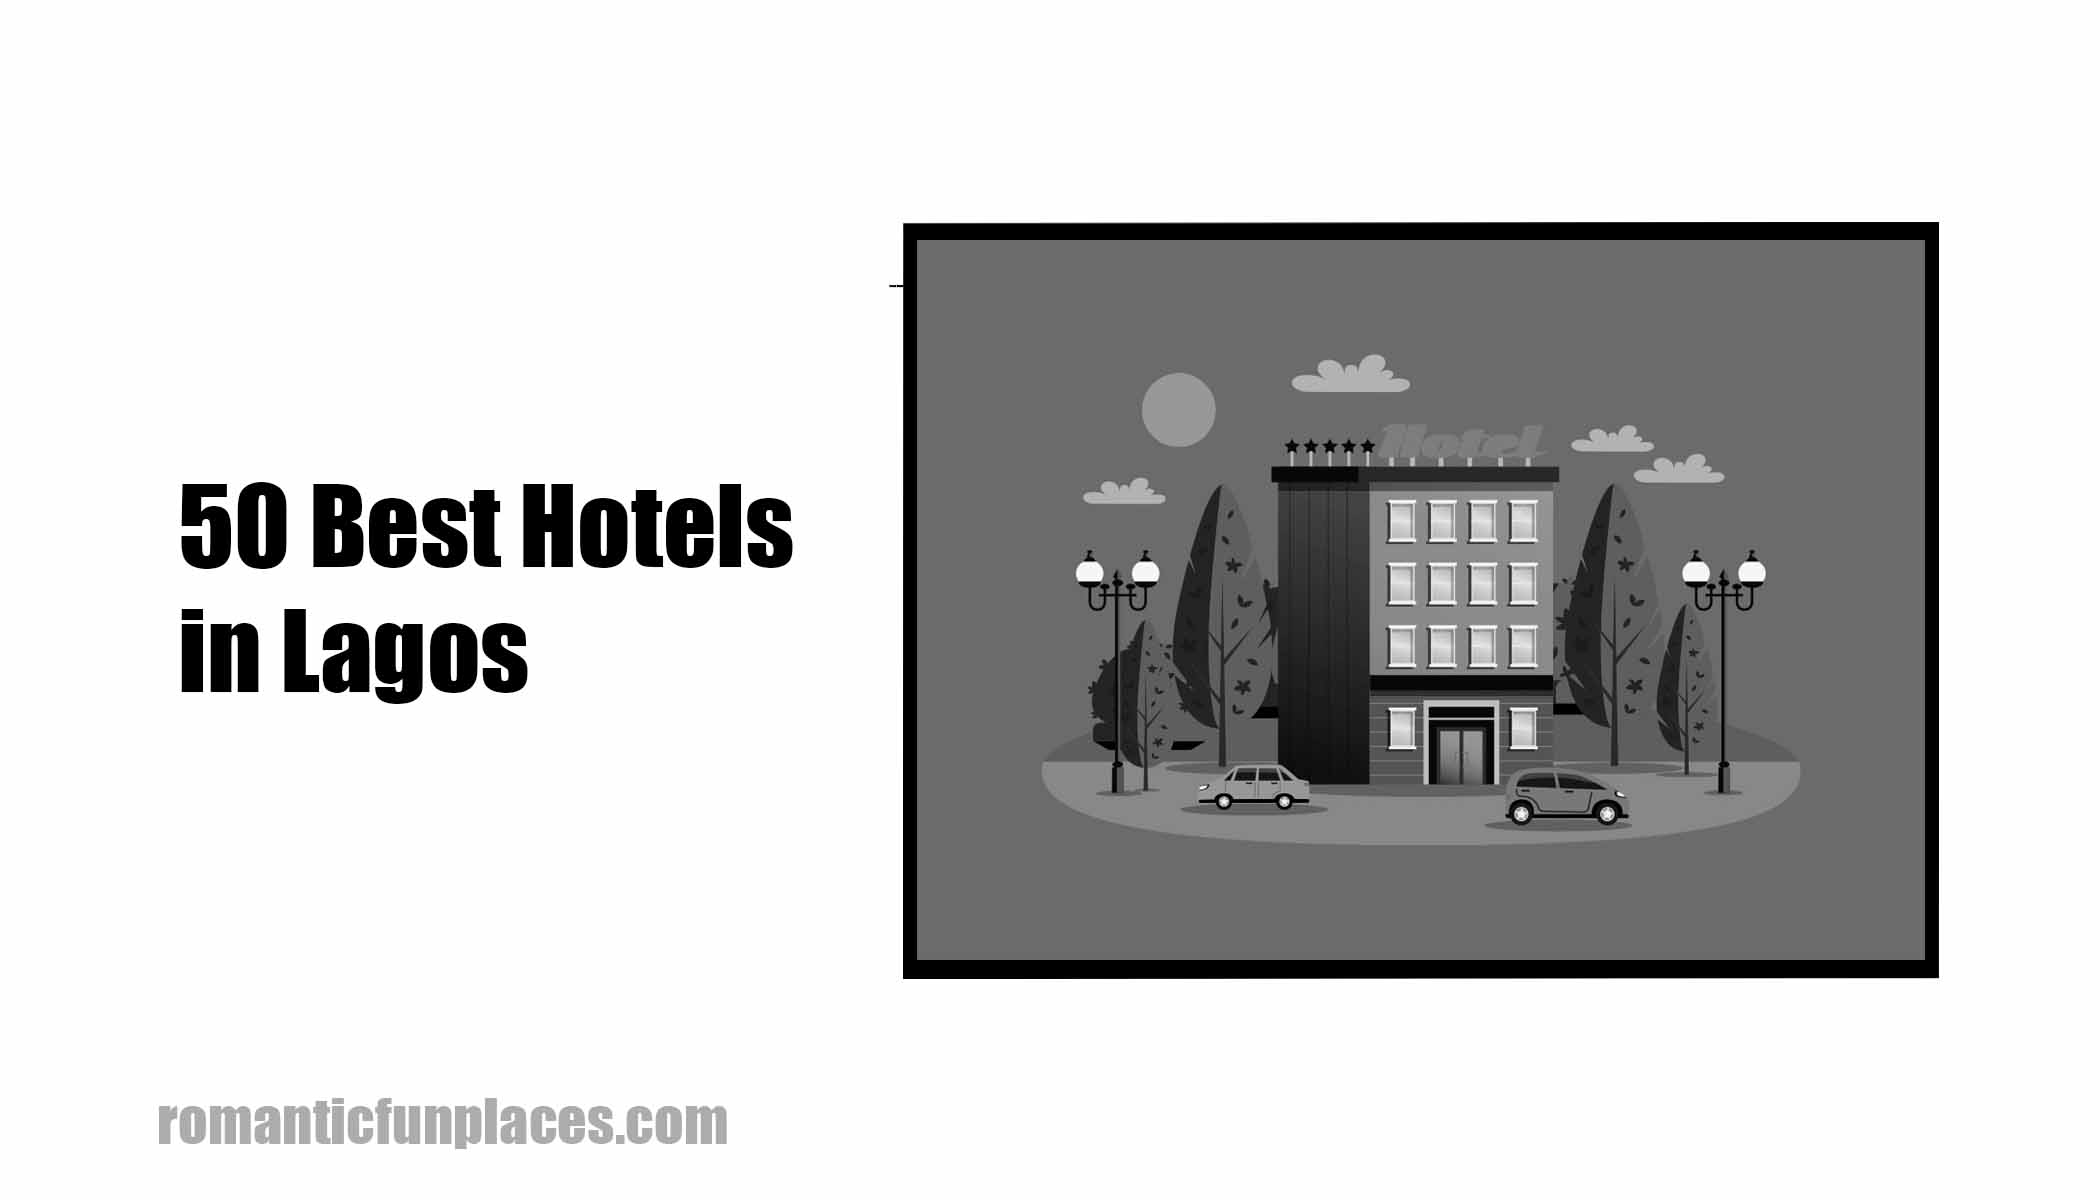 50 Best Hotels in Lagos